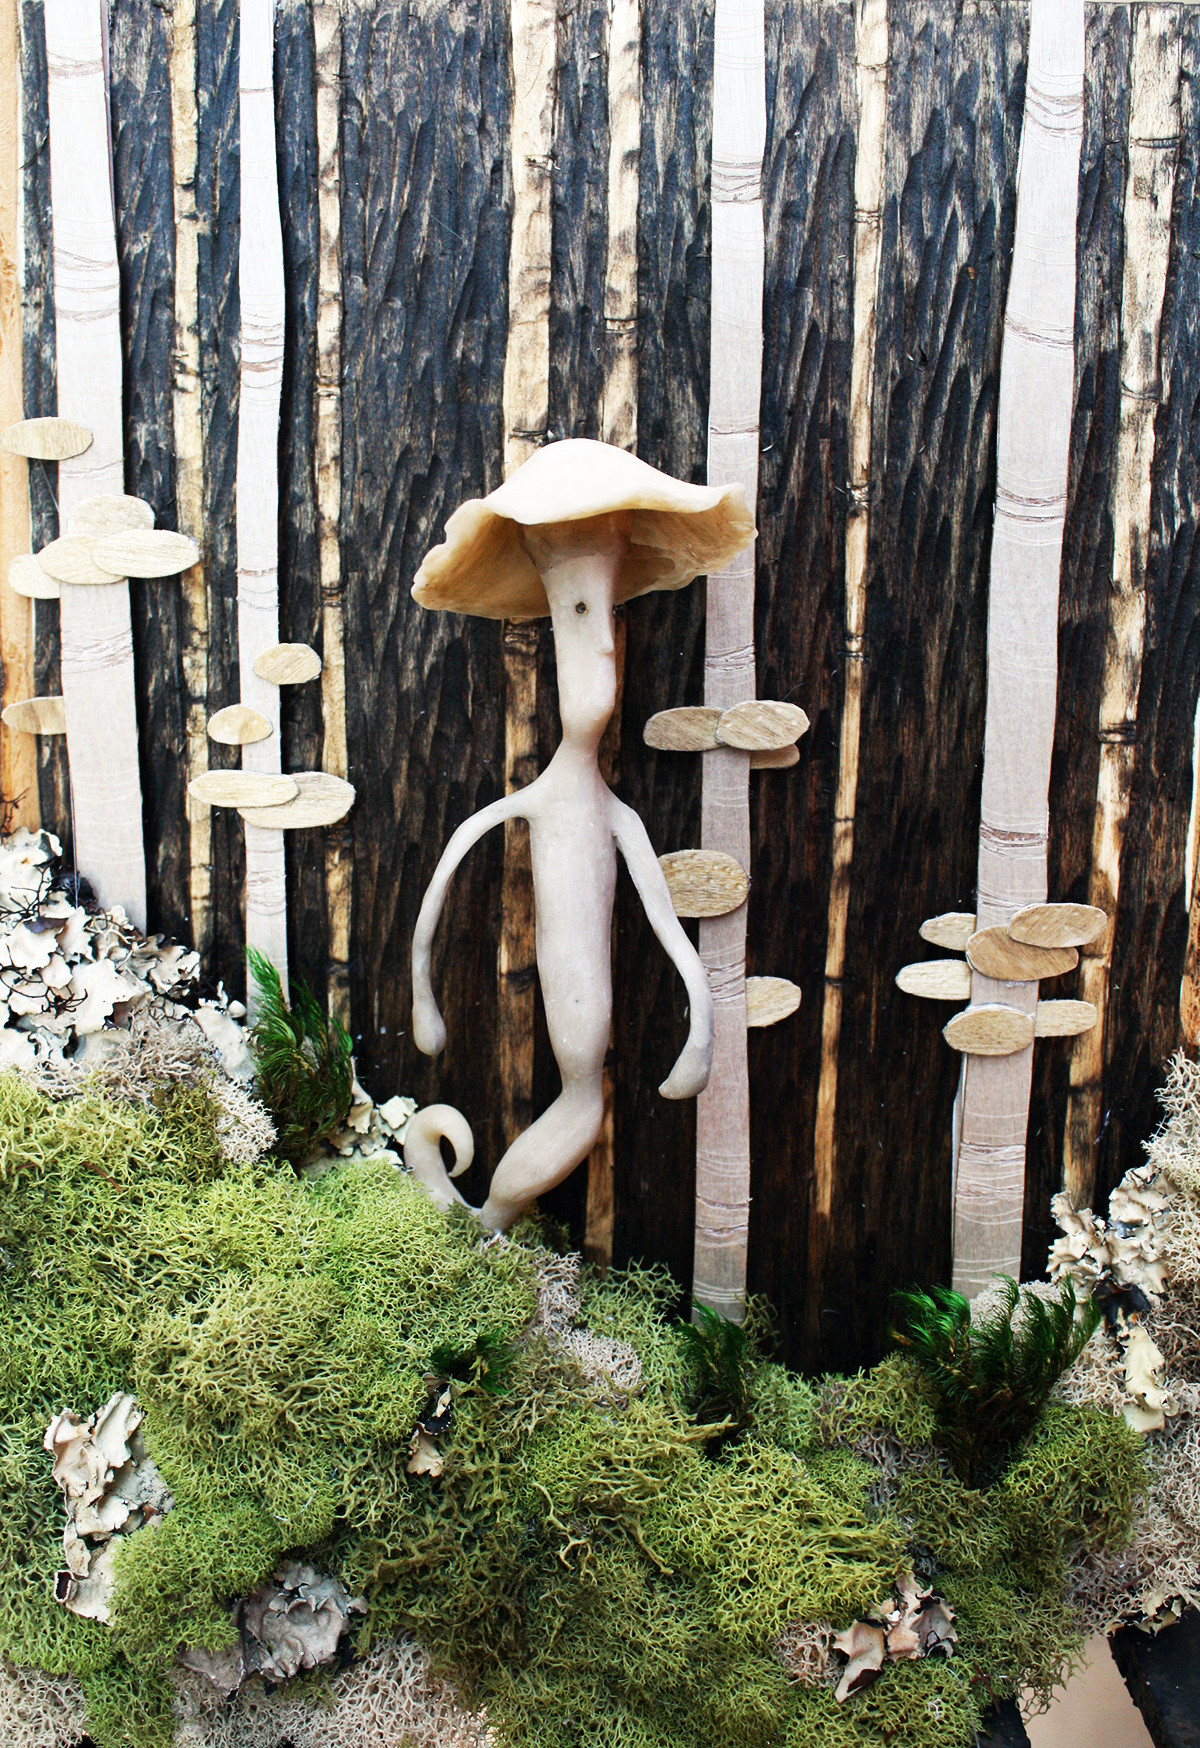 Diorama mushroom spirit fungus spore pandora's box famine sculpture Miniature